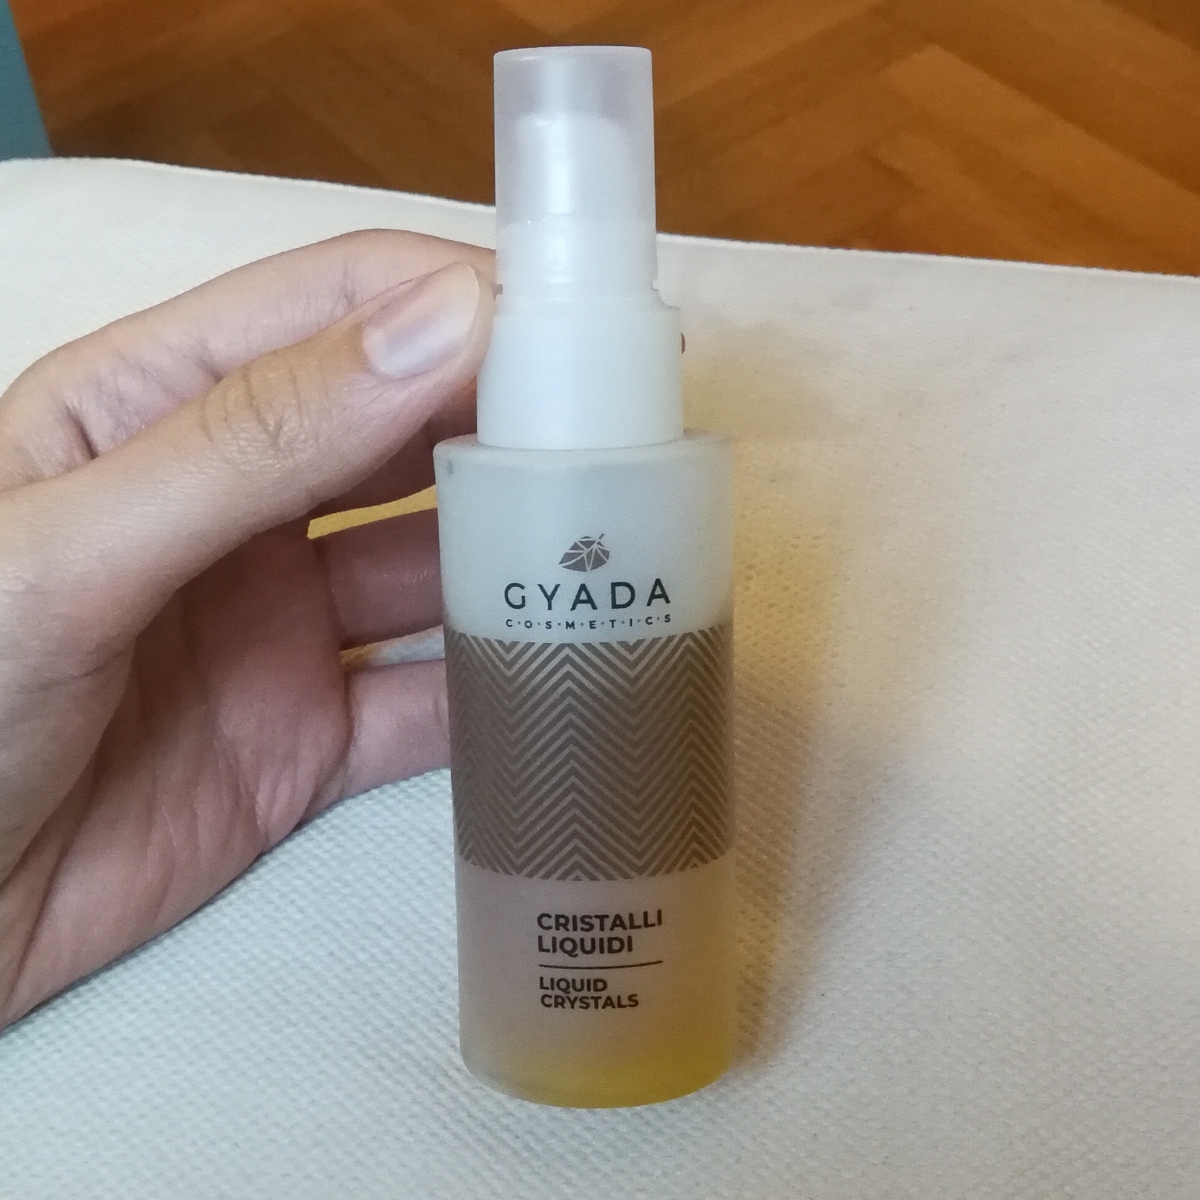 Gyada Cosmetics Cristalli Liquidi Reviews | abillion